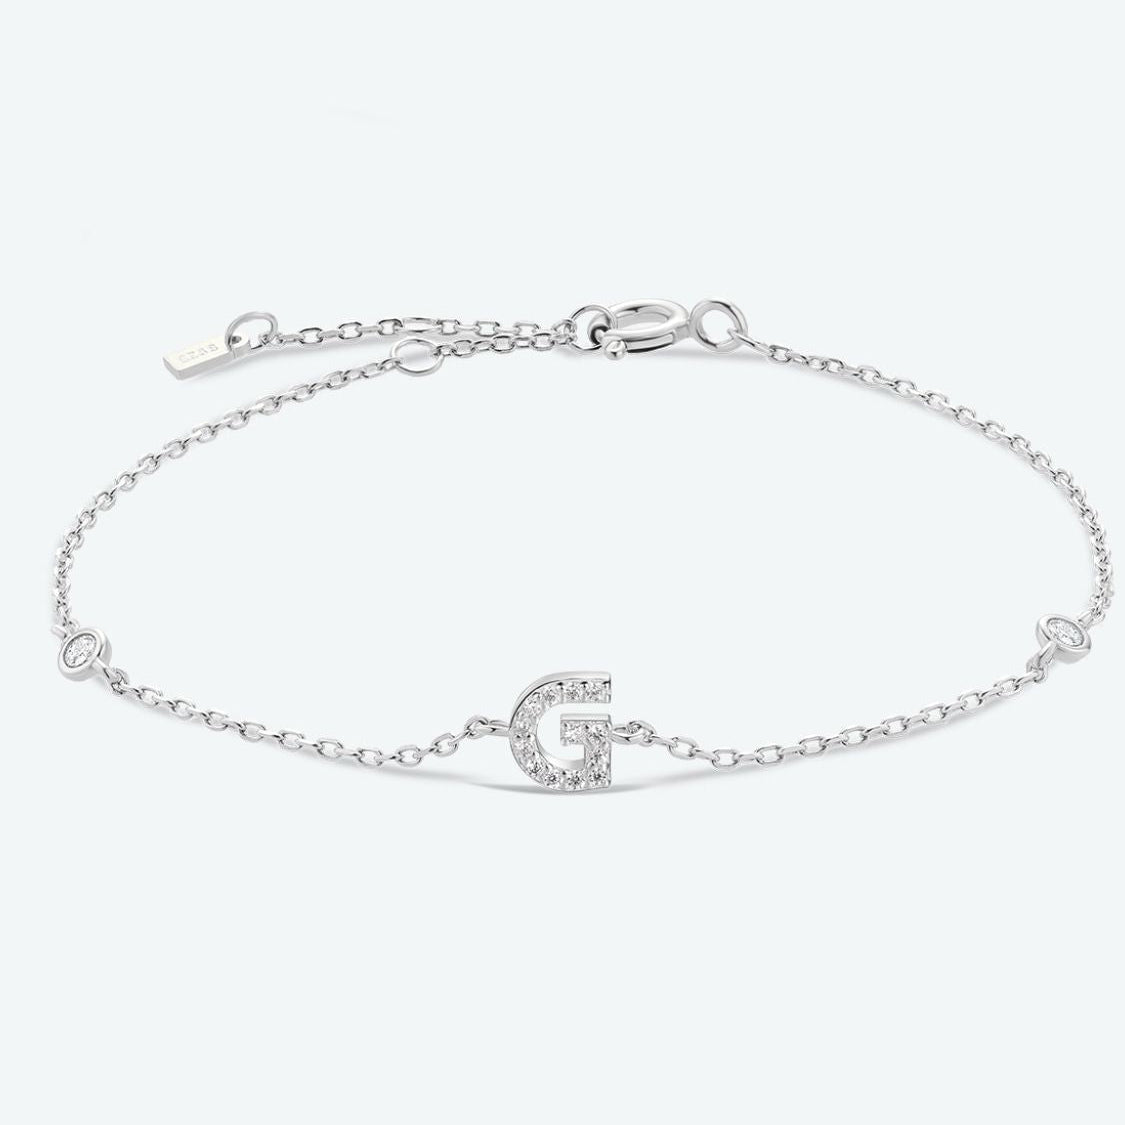 G To K Zircon 925 Sterling Silver Bracelet - Guy Christopher